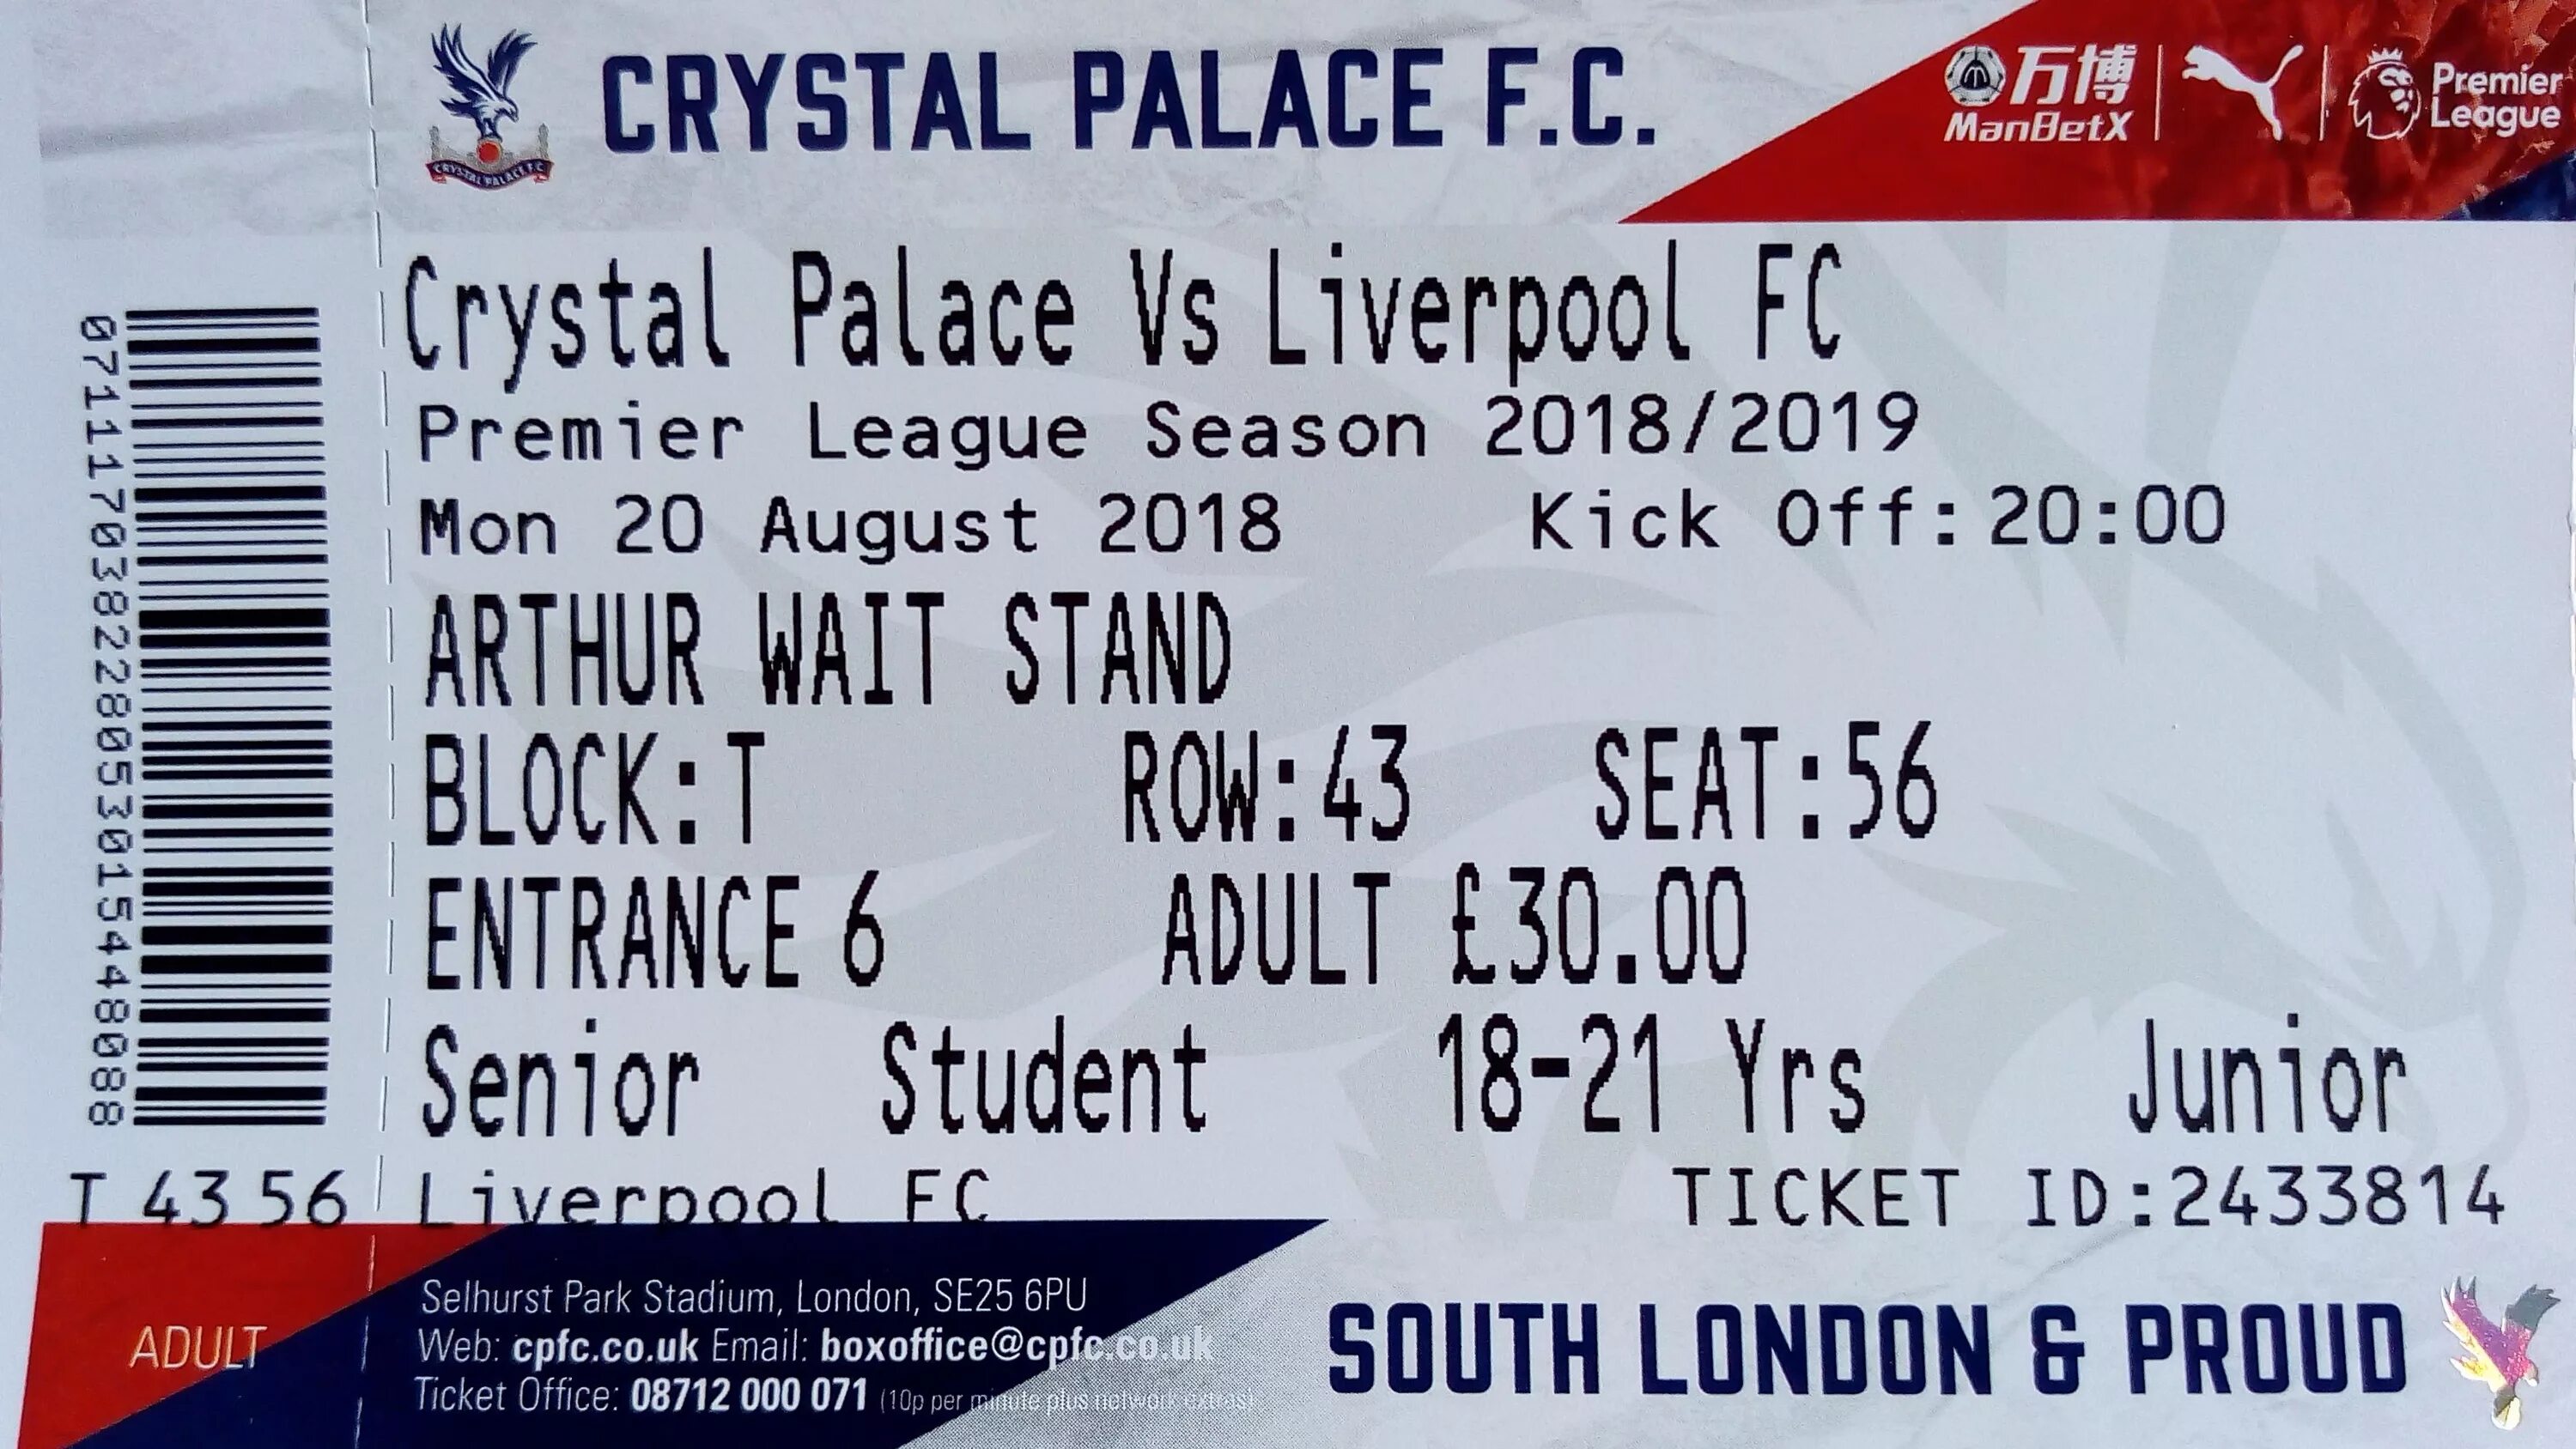 V tickets. Single ticket. Return ticket. Ticket to England. Ticket to London.